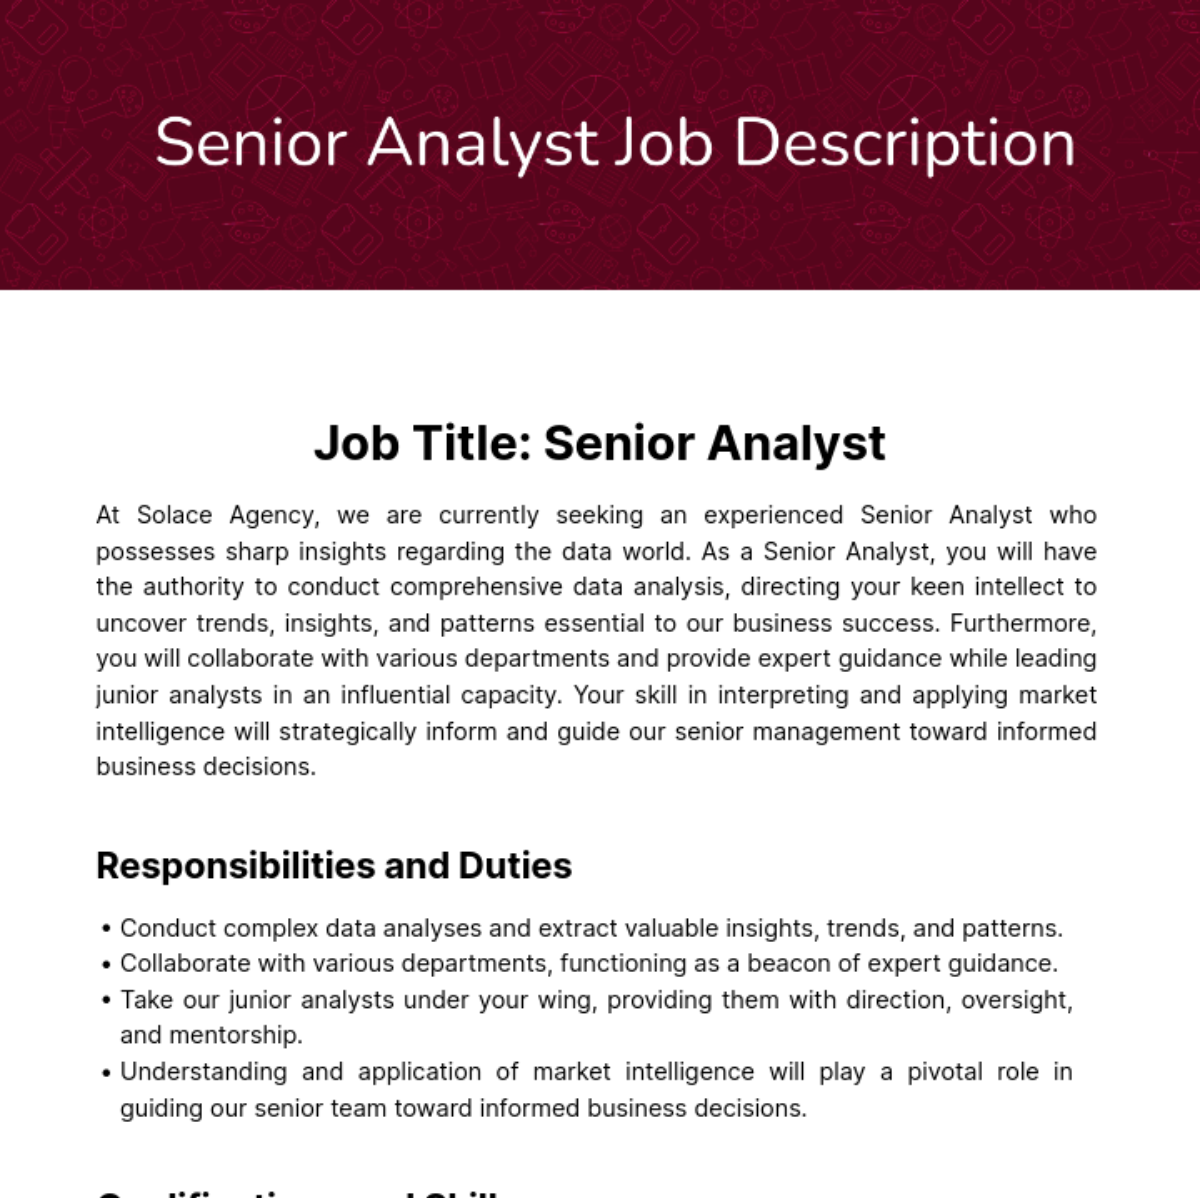 Senior Analyst Job Description Template